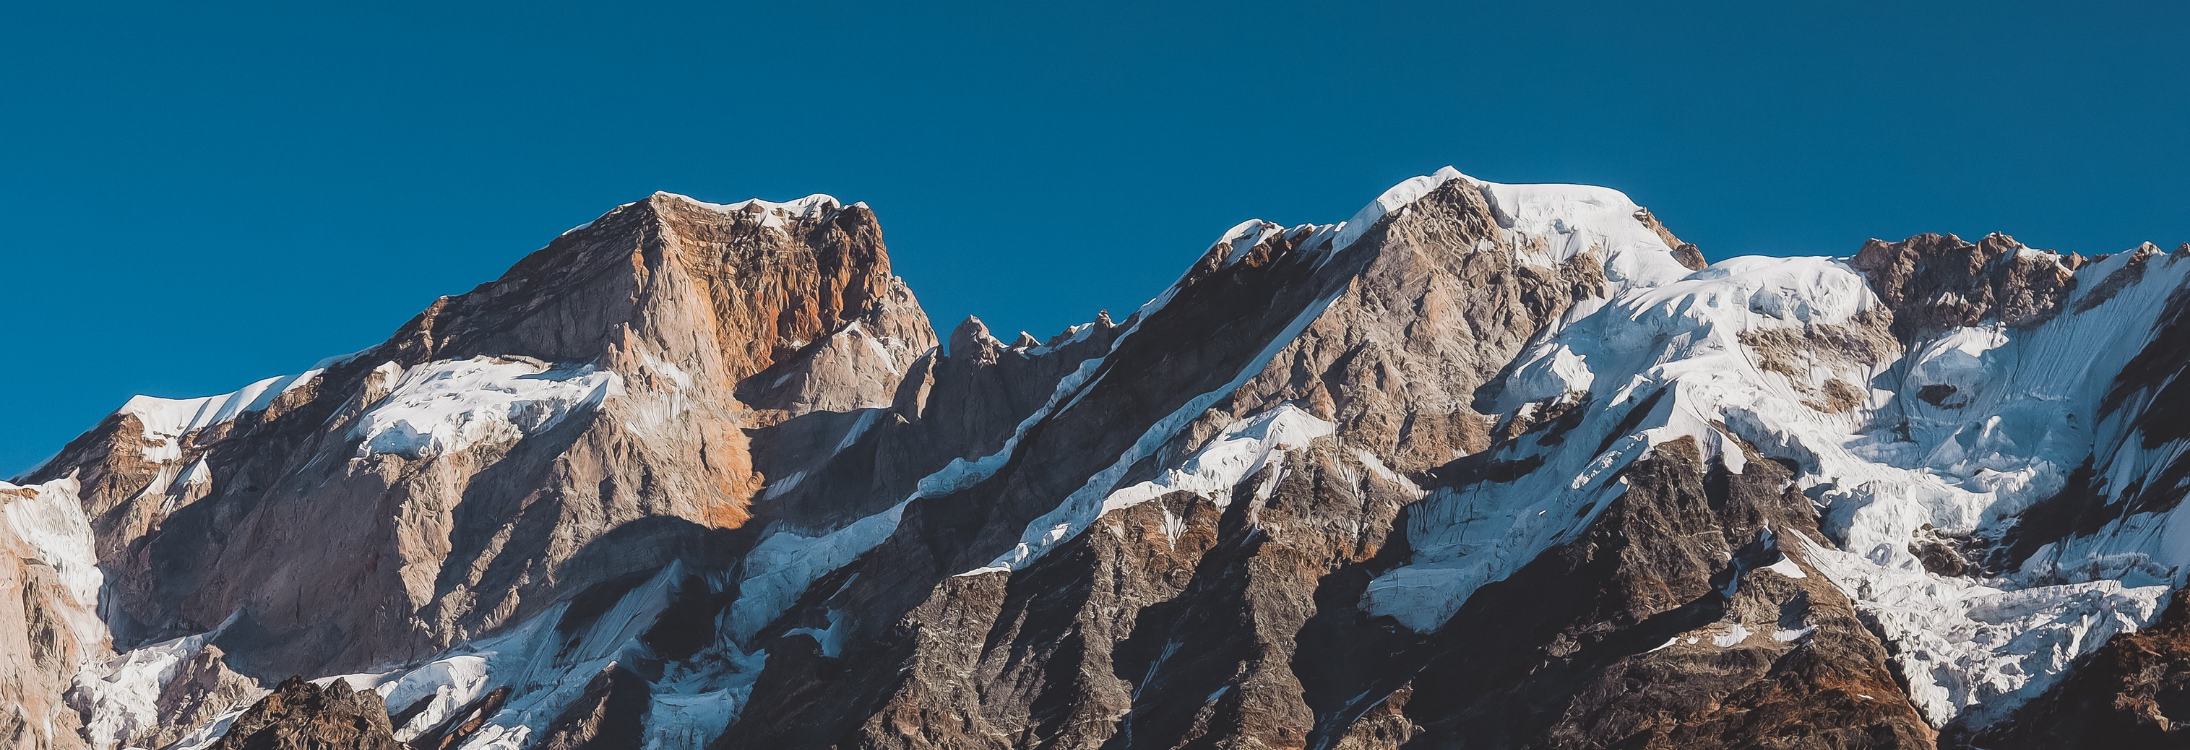 Kedarnath mountain peak